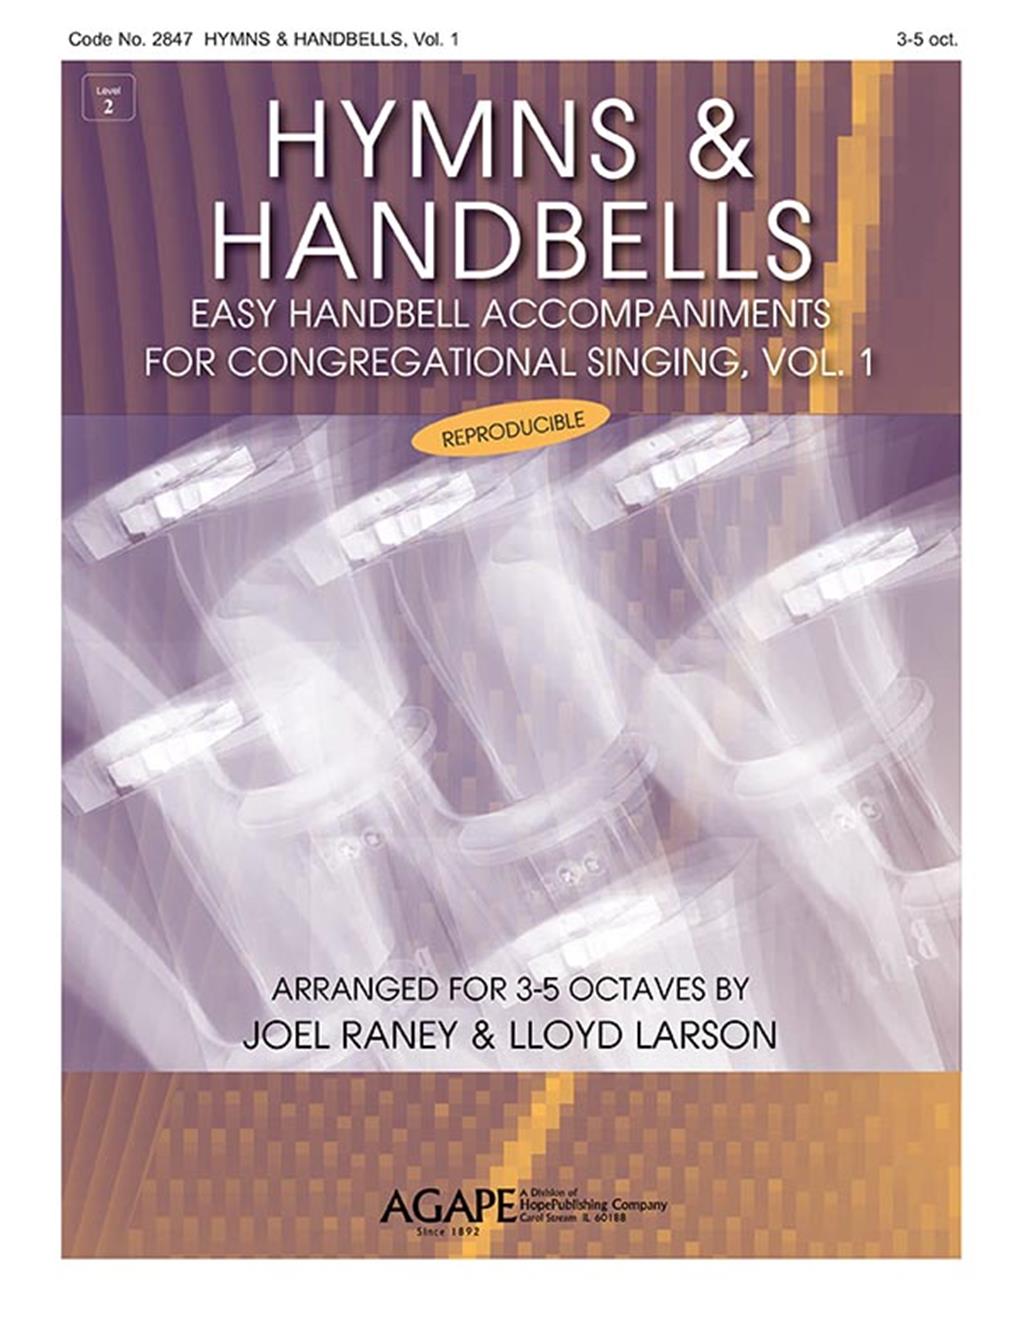 Hymns and Handbells: Easy Handbell Accomp For Cong. Sing - 3-5 oct. reproducible Cover Image